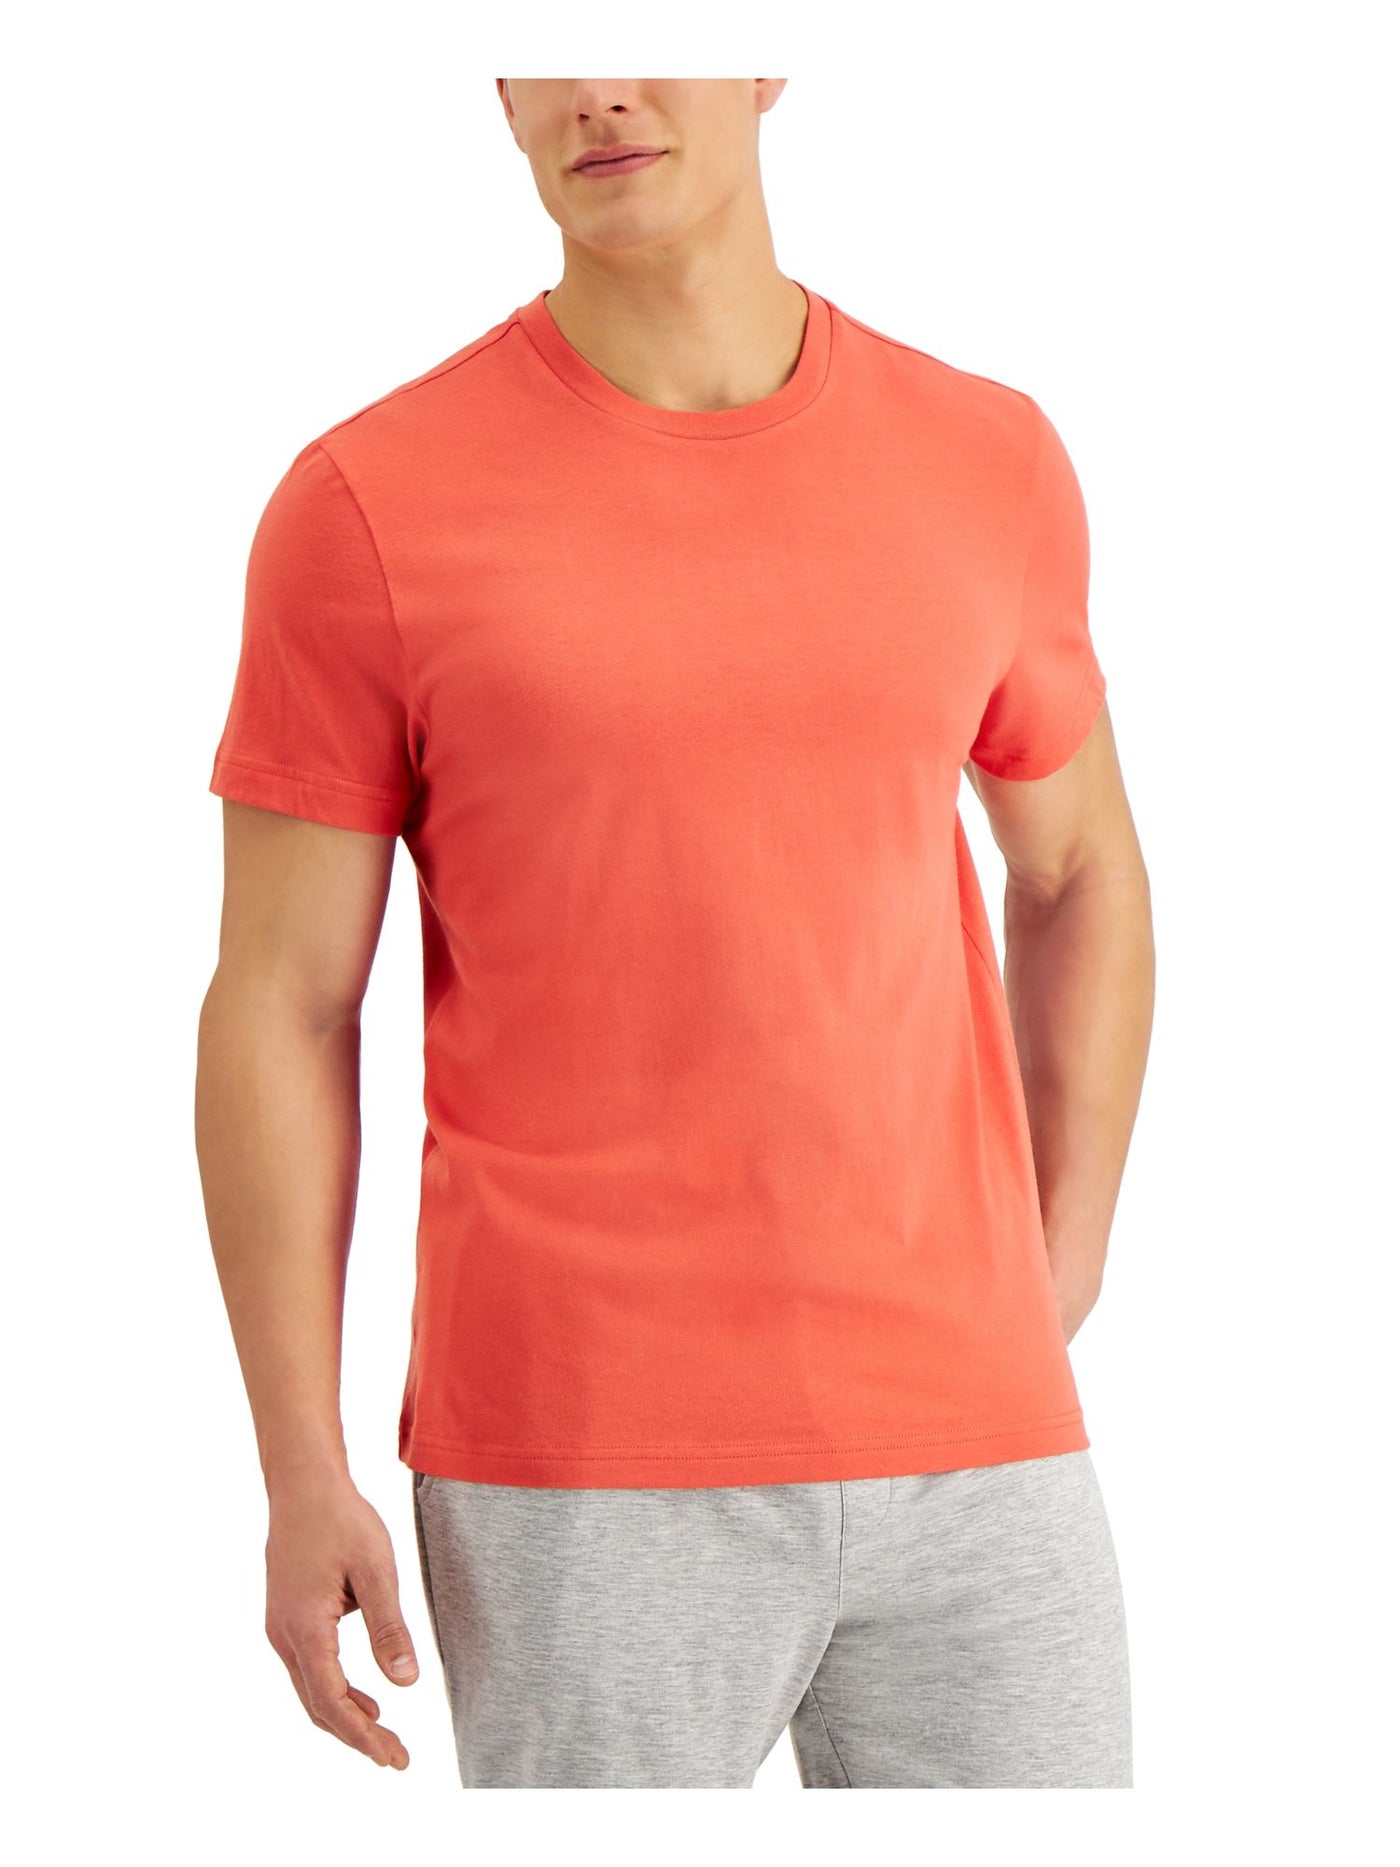 CLUBROOM Mens Coral Classic Fit Cotton T-Shirt XXL